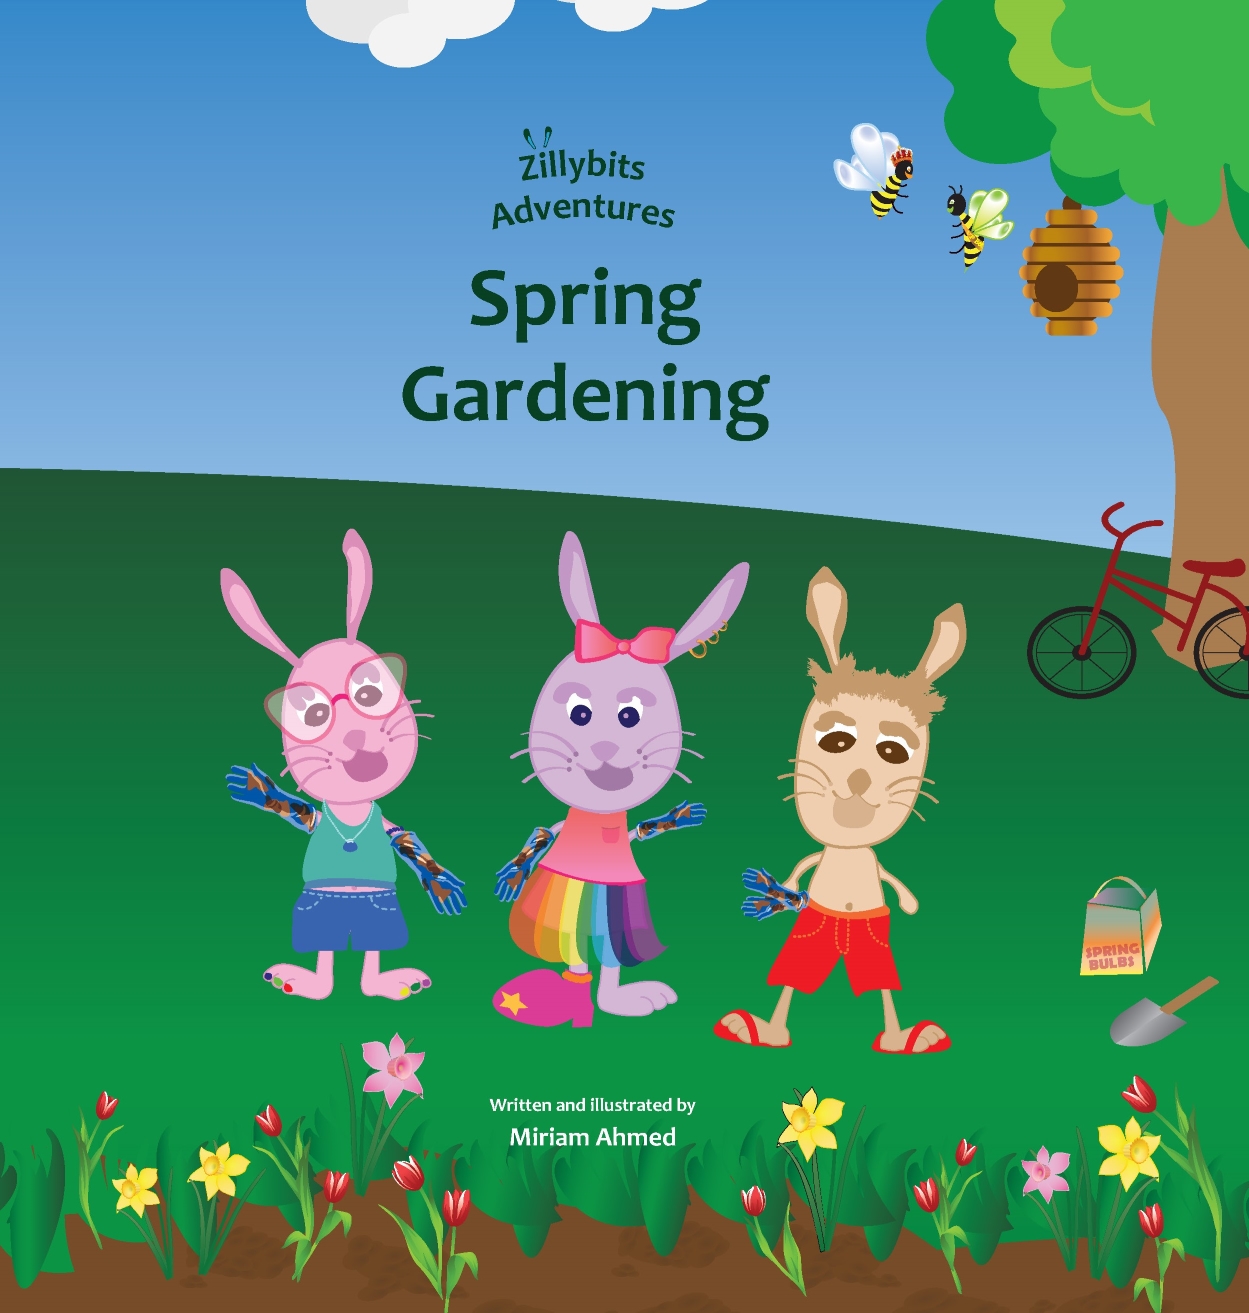 Zillybits Adventures 1 Spring Gardening COVER PRESS